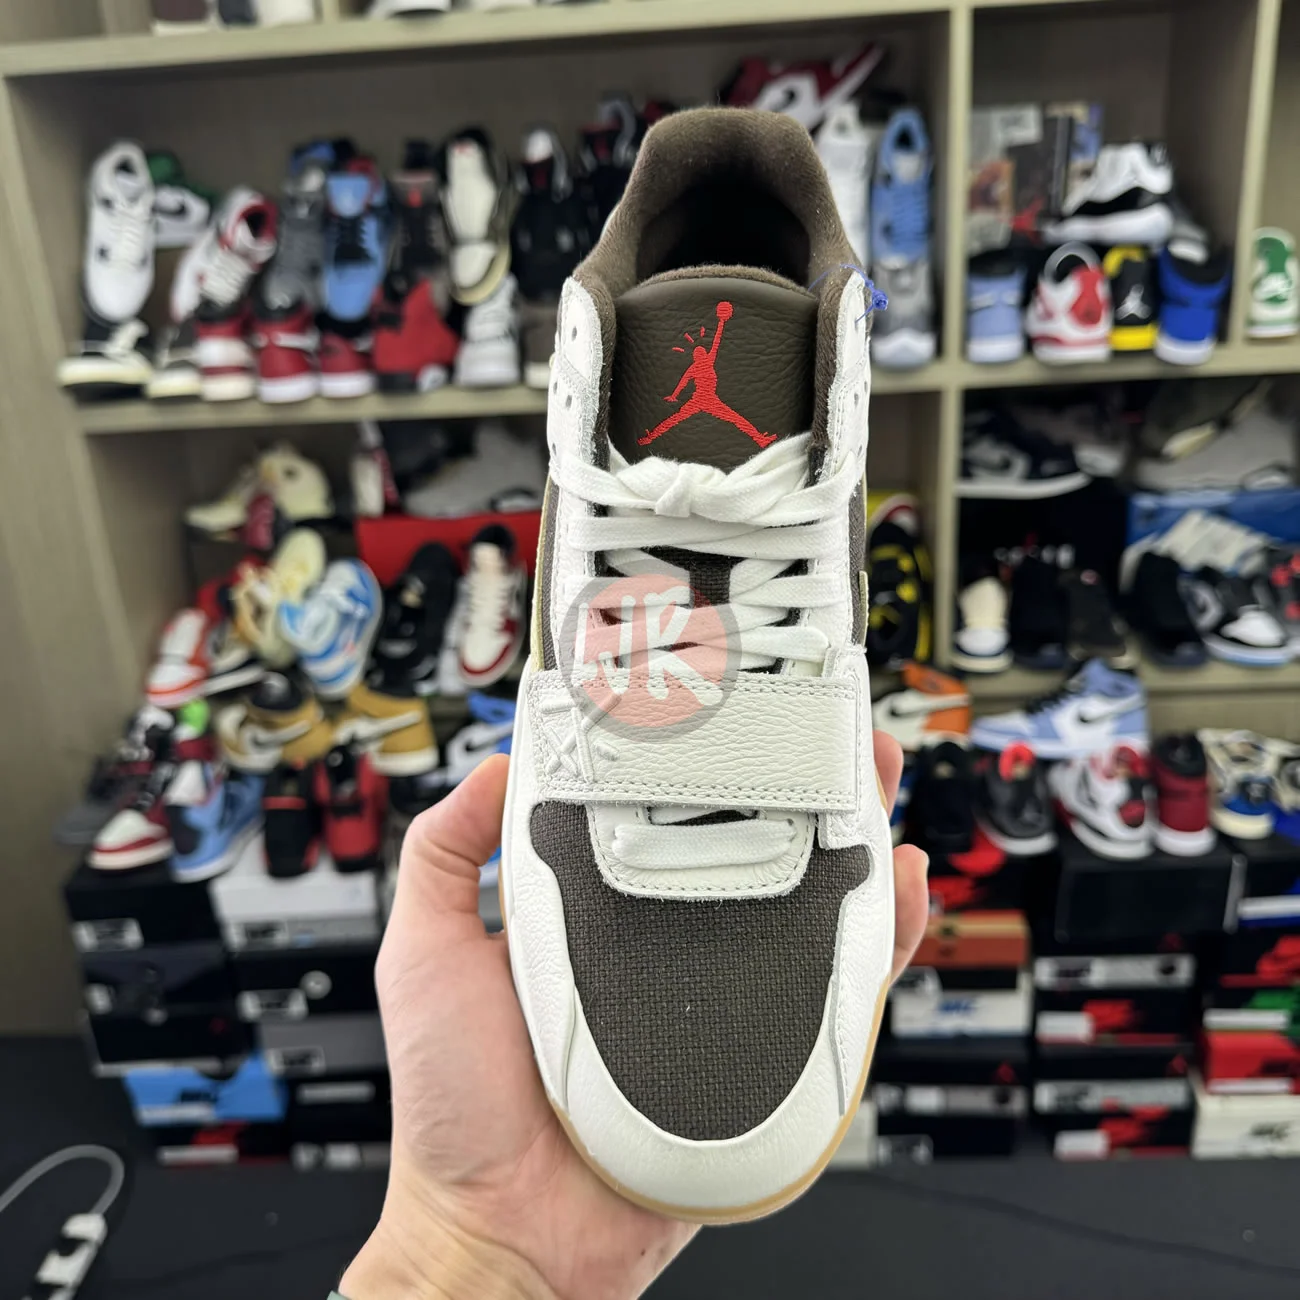 Travis Scott X Jordan Cut The Check Trainer Release Date Ljr Sneakers (4) - bc-ljr.com